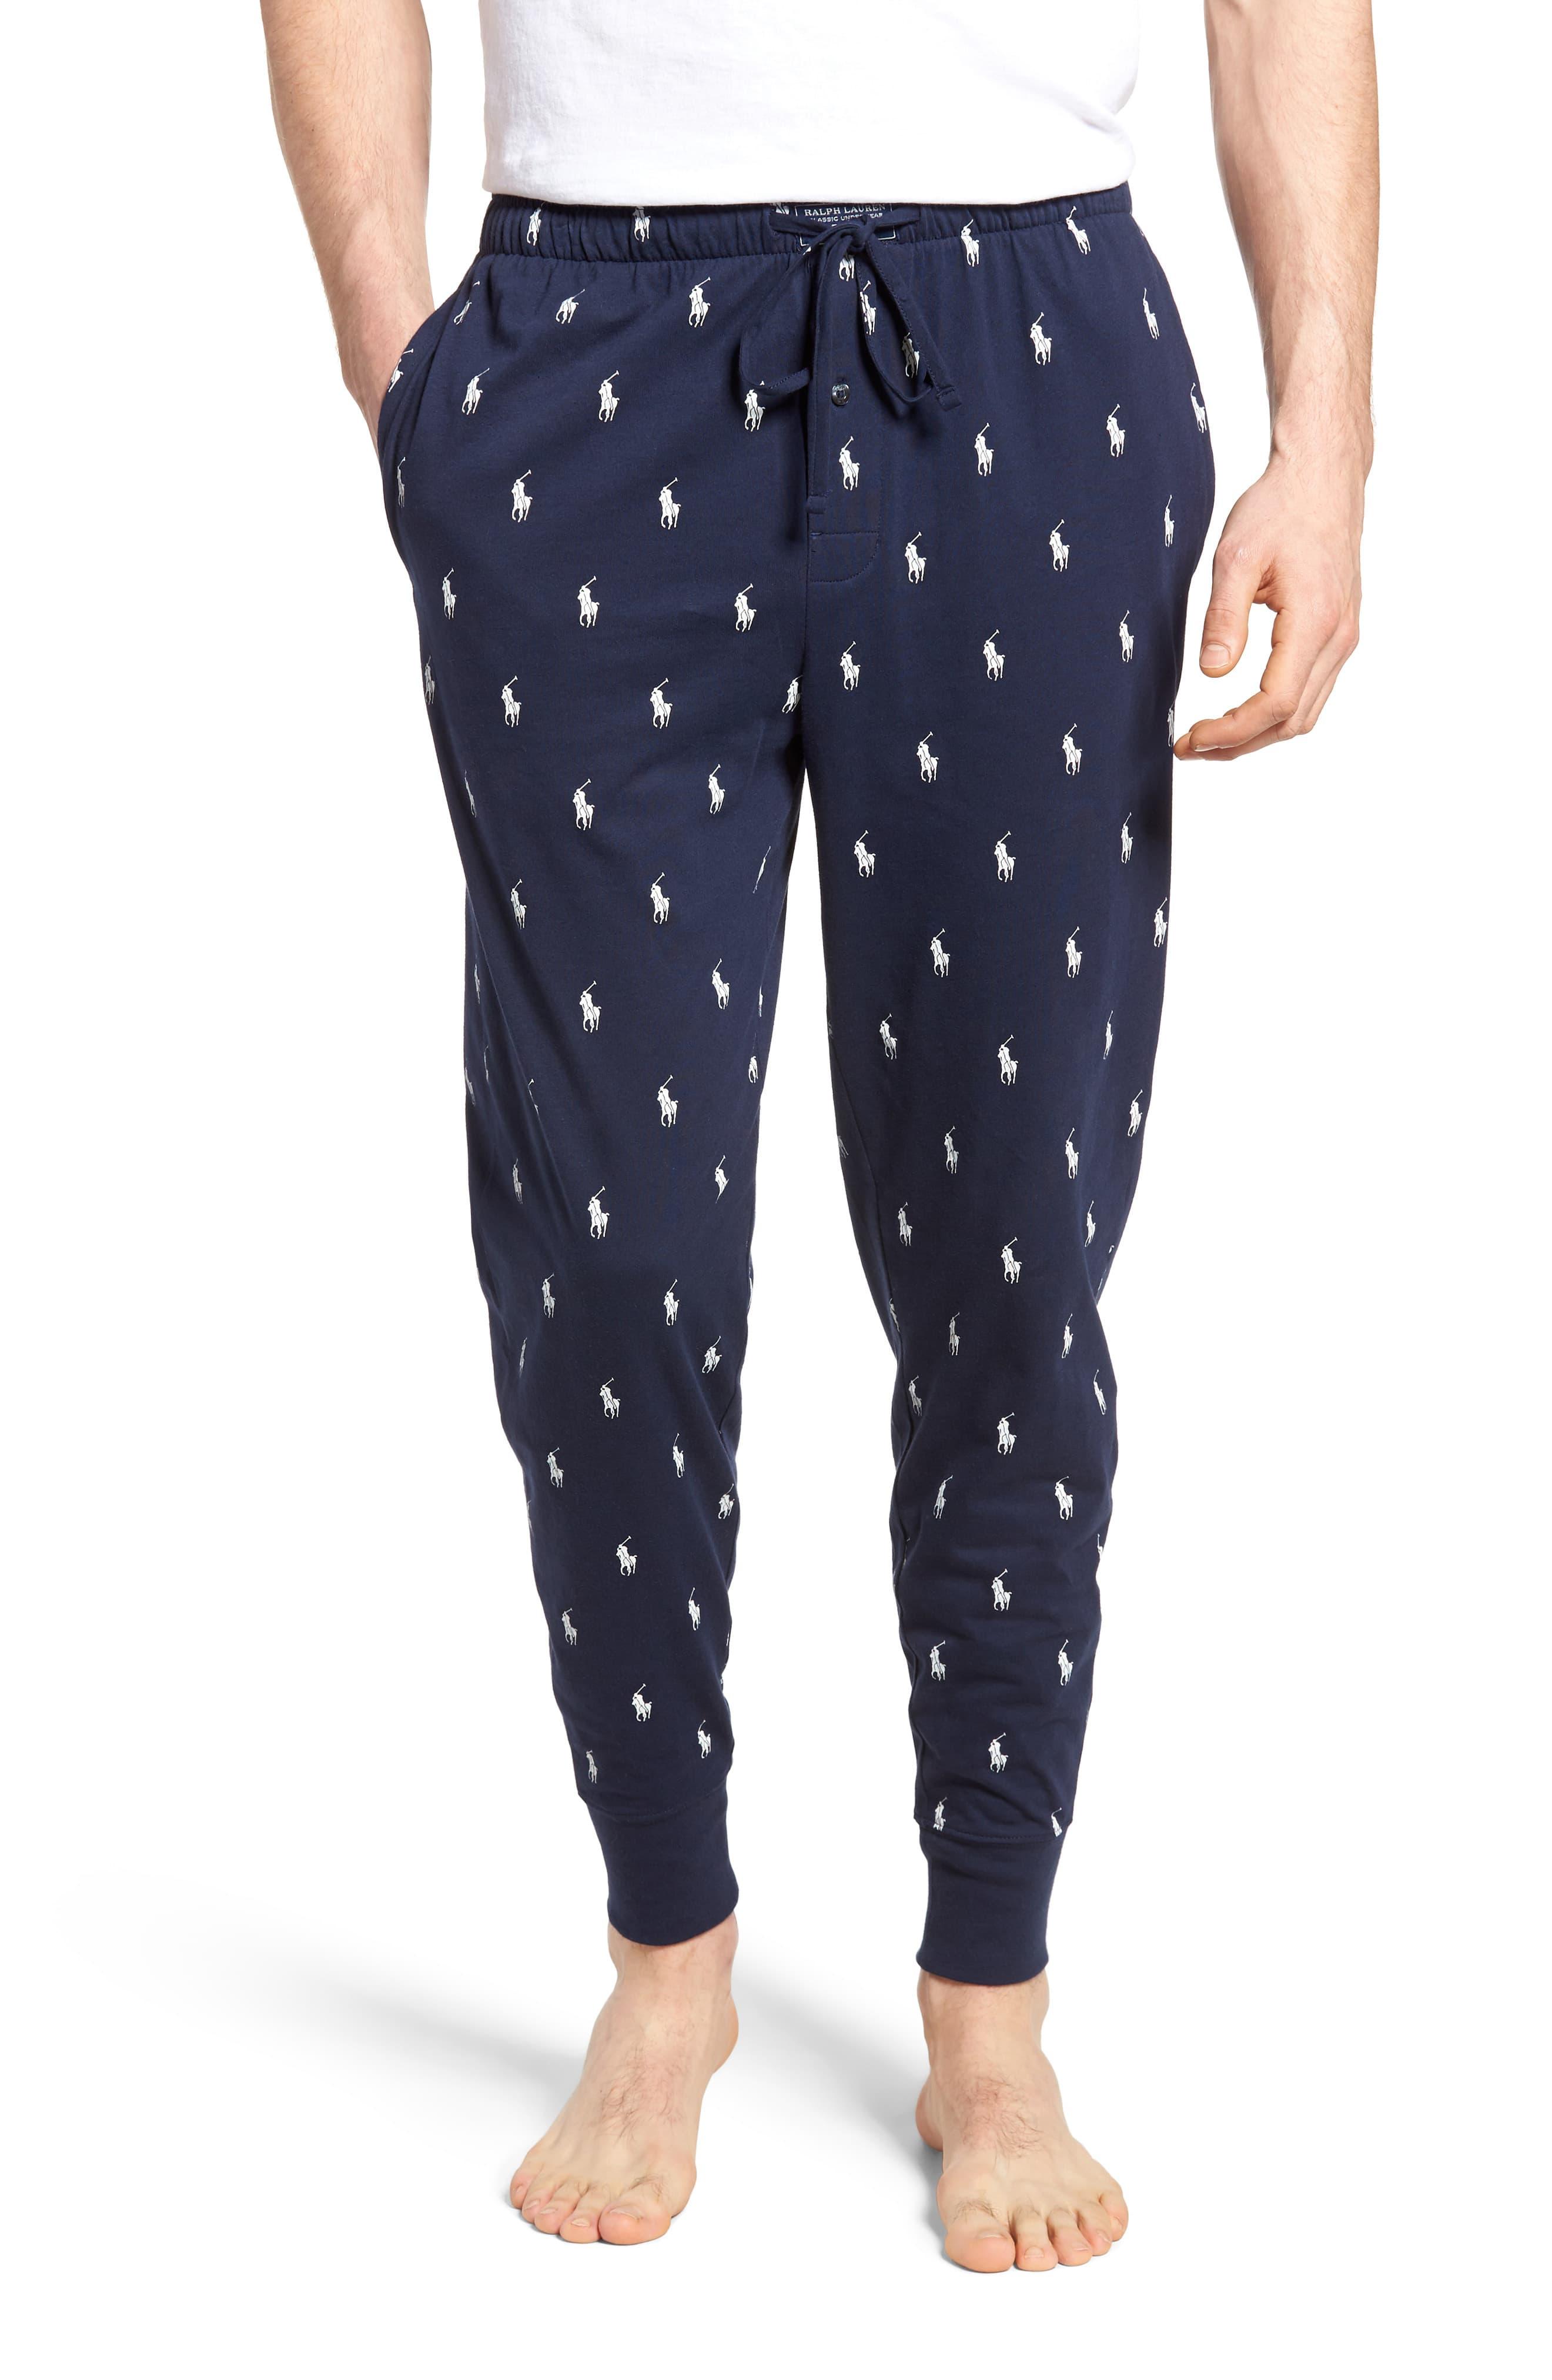 Polo Ralph Lauren Pony Print Pajama Pants in Blue for Men - Lyst